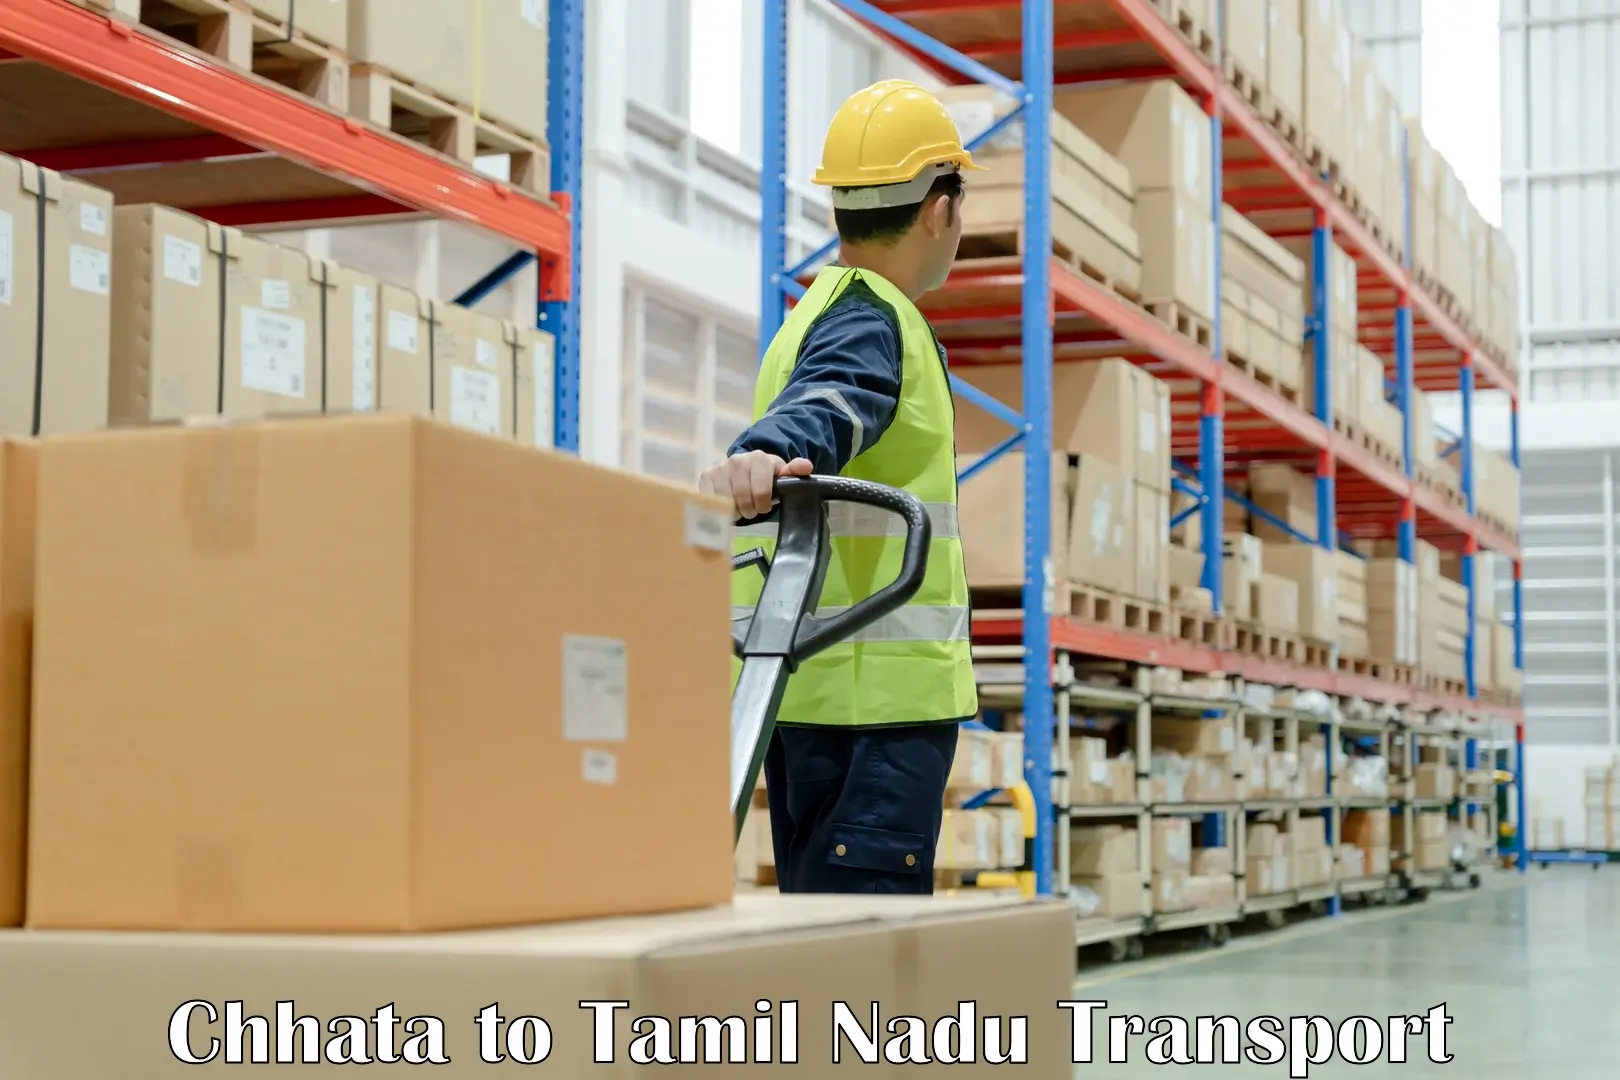 Goods delivery service Chhata to Chennai Port